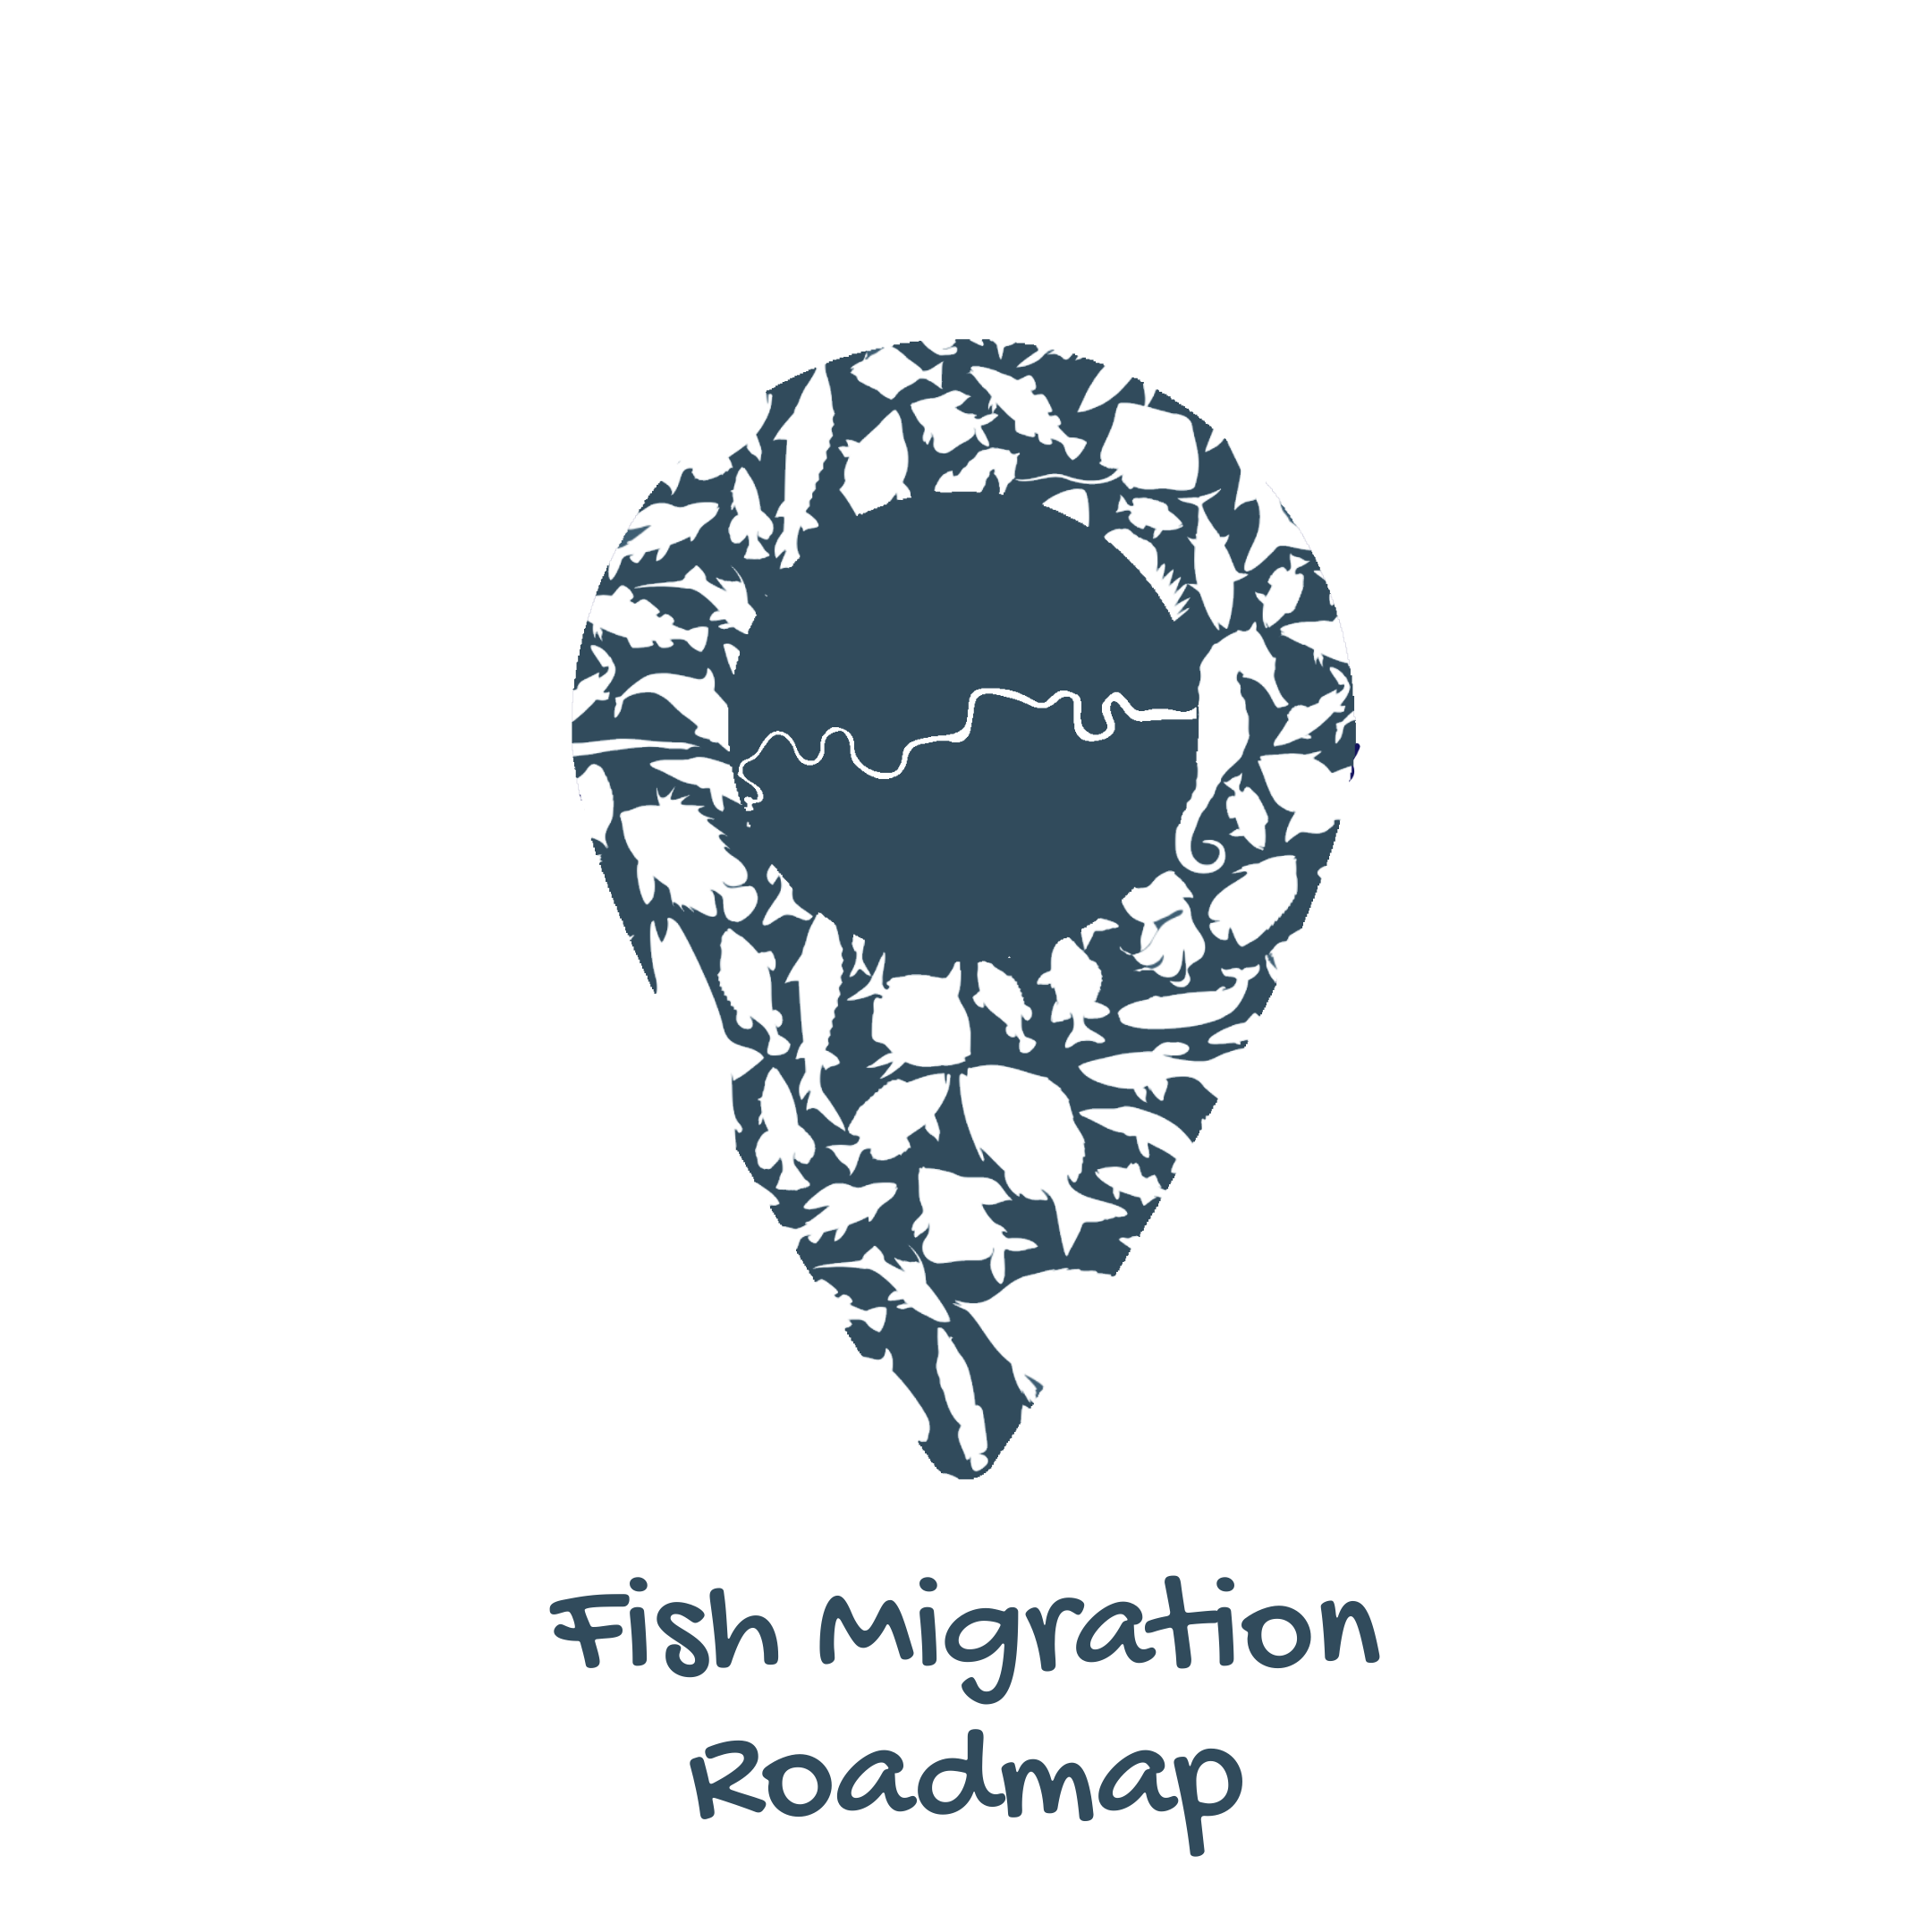 Roadmap_logo_TEP